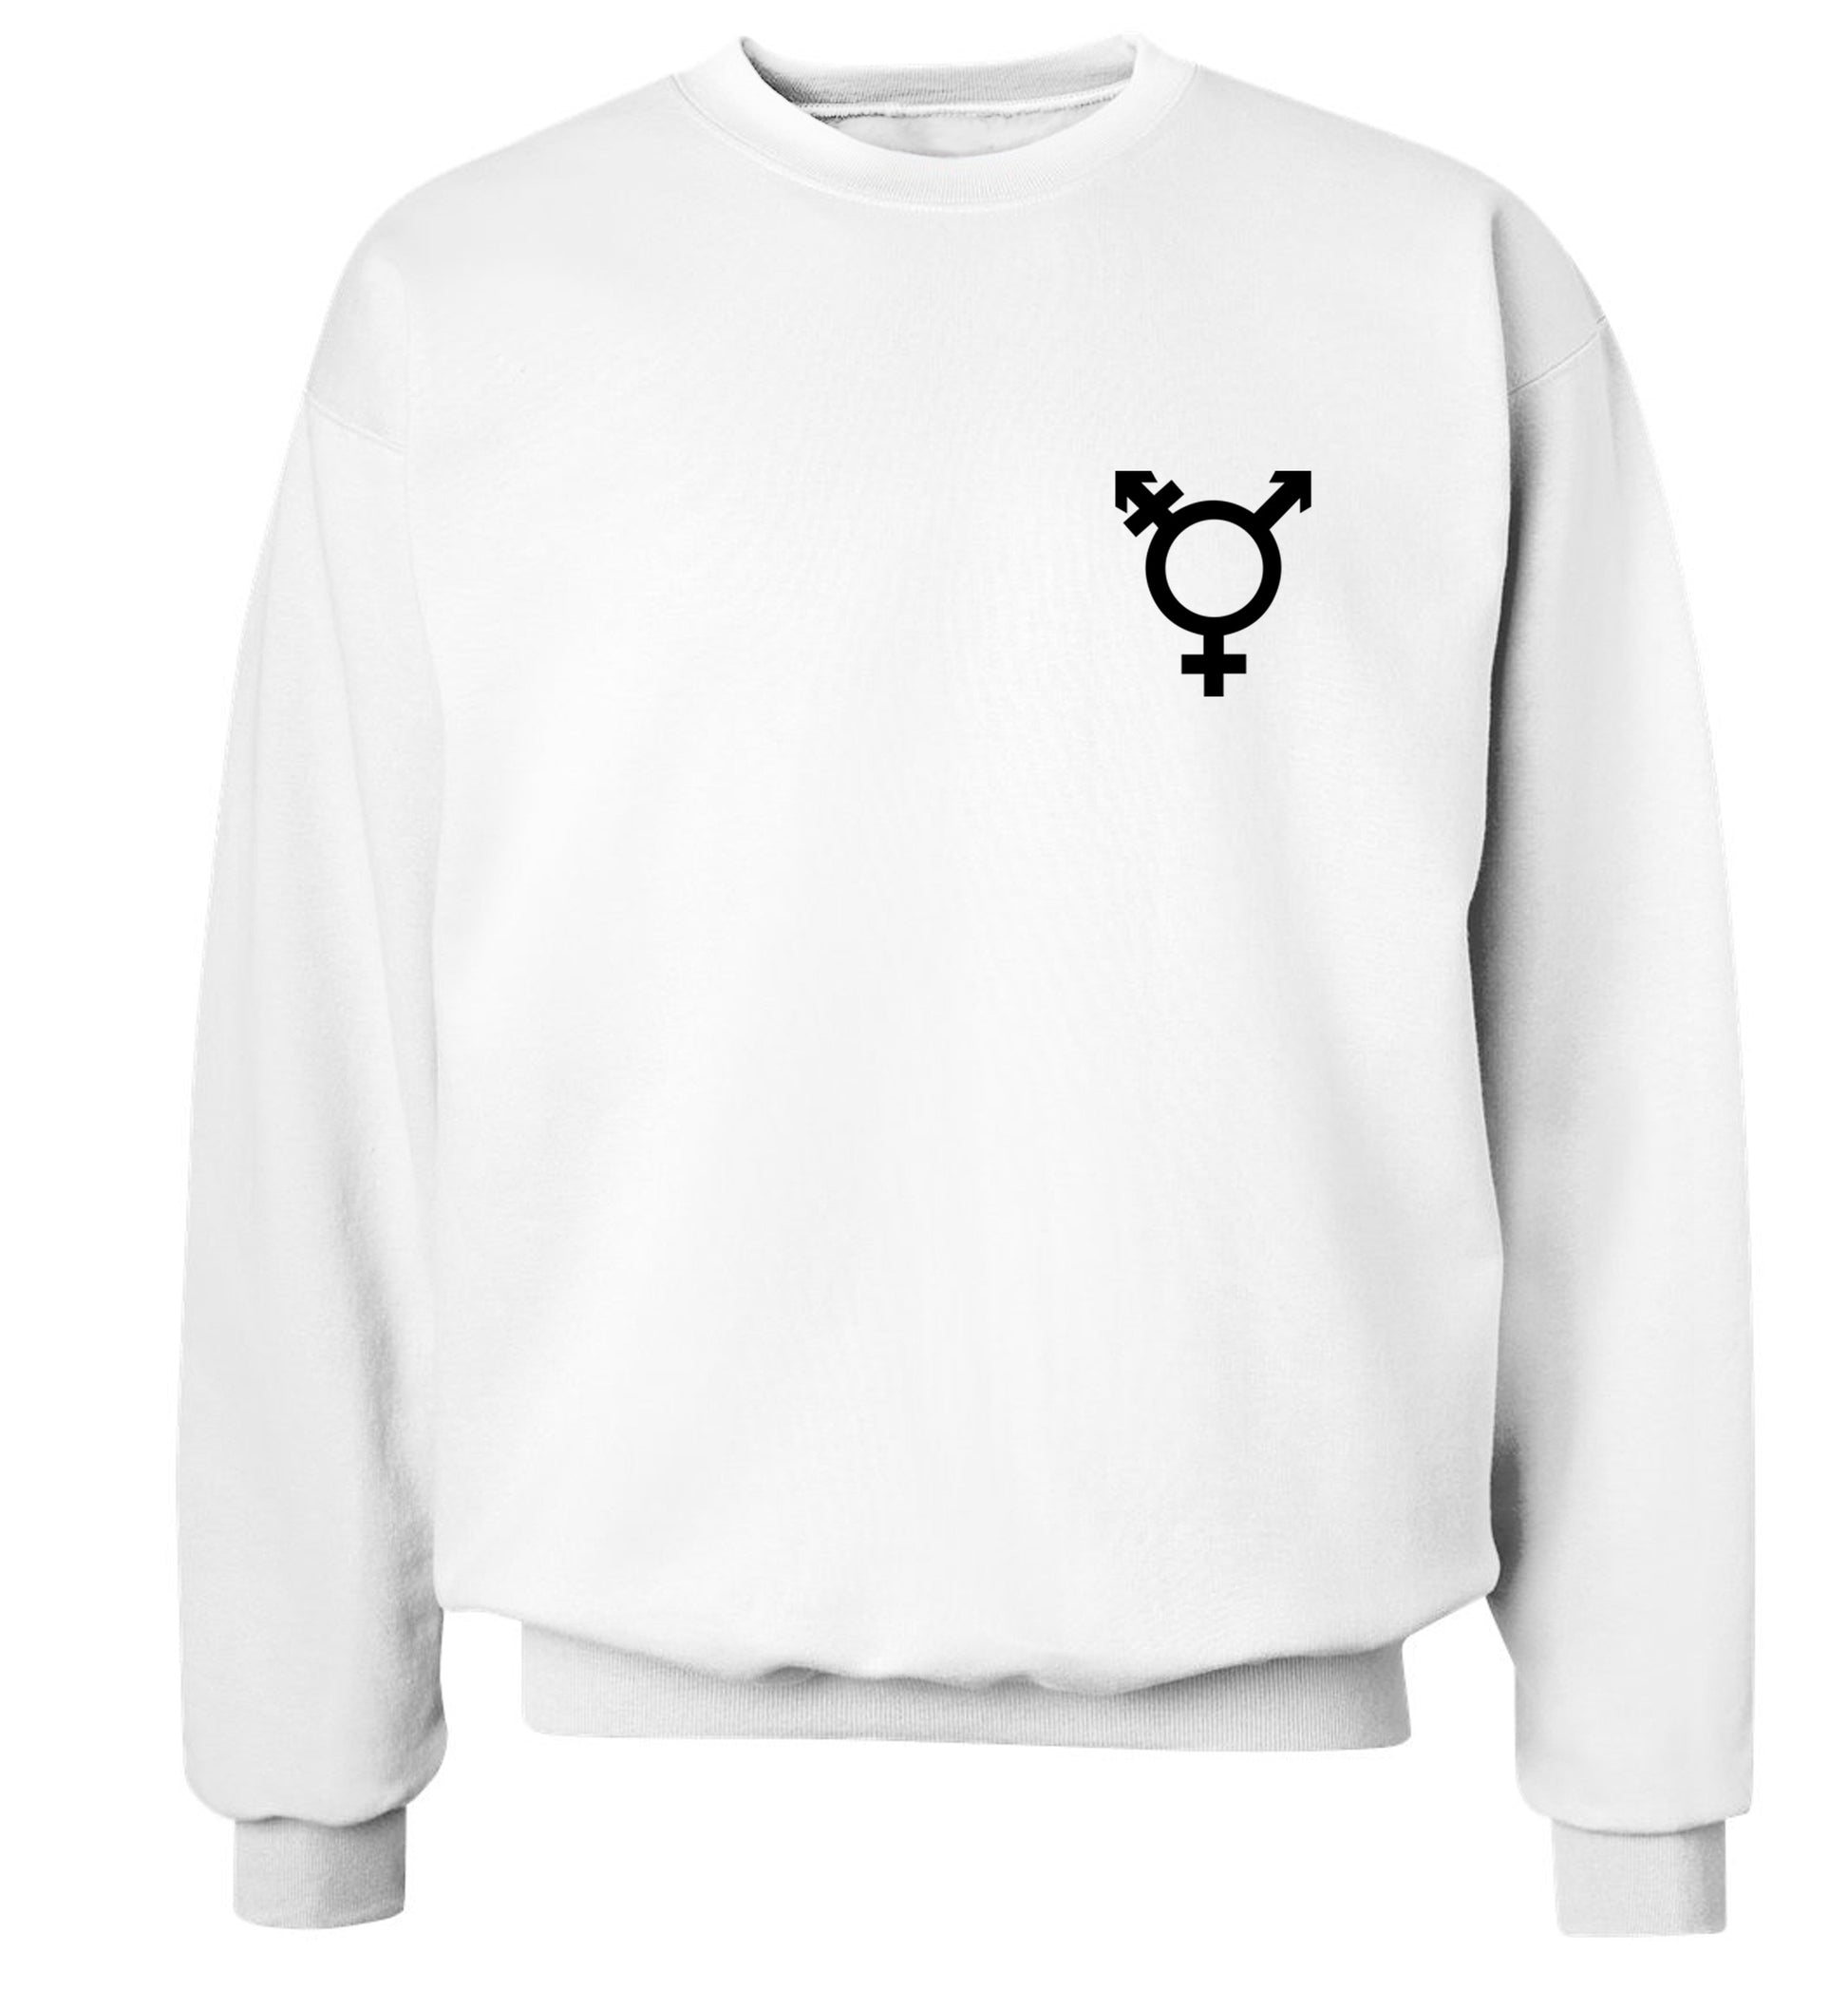 Trans gender symbol pocket Adult's unisex white Sweater 2XL